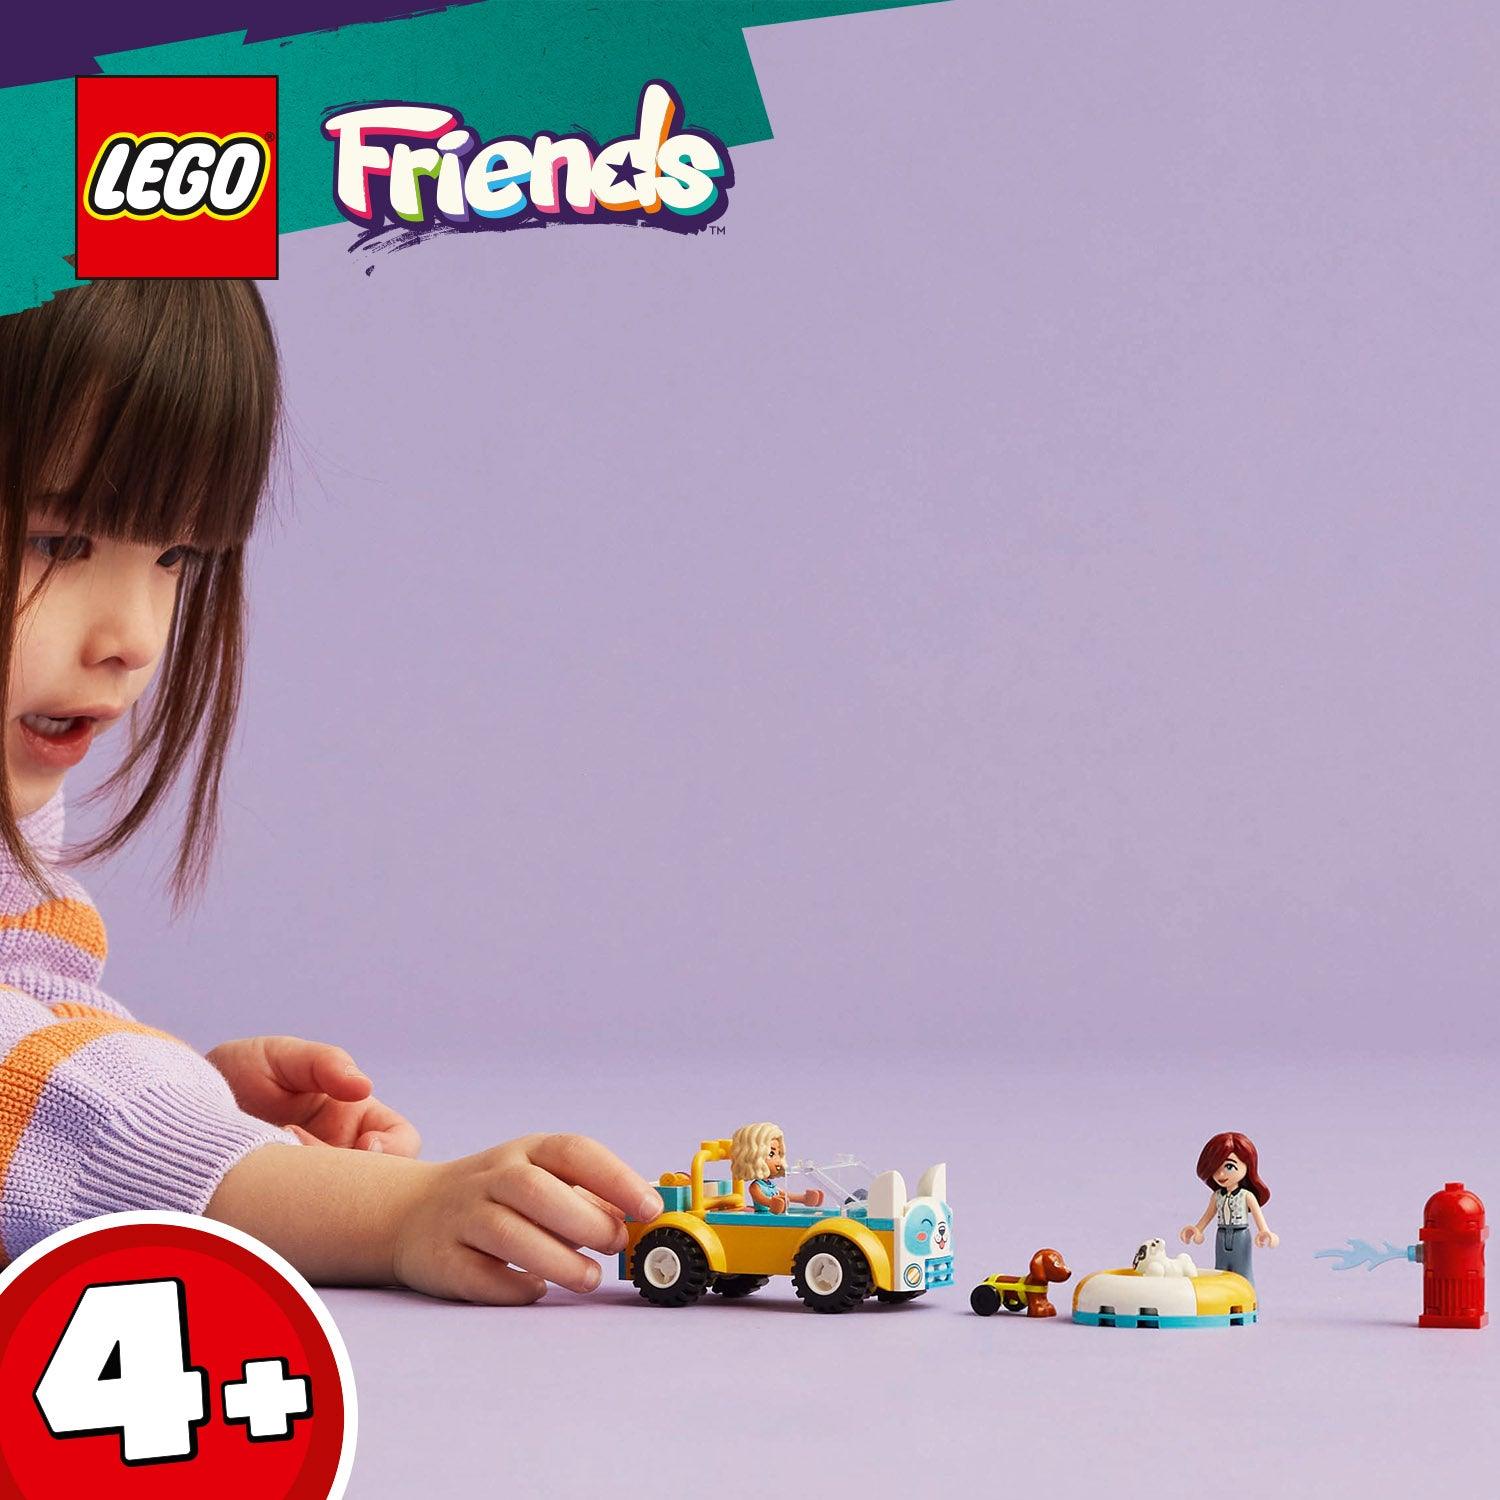 LEGO Mobiel Hondenkapsalon 42635 Friends (Pre-Order: verwacht juni) LEGO FRIENDS @ 2TTOYS LEGO €. 8.49